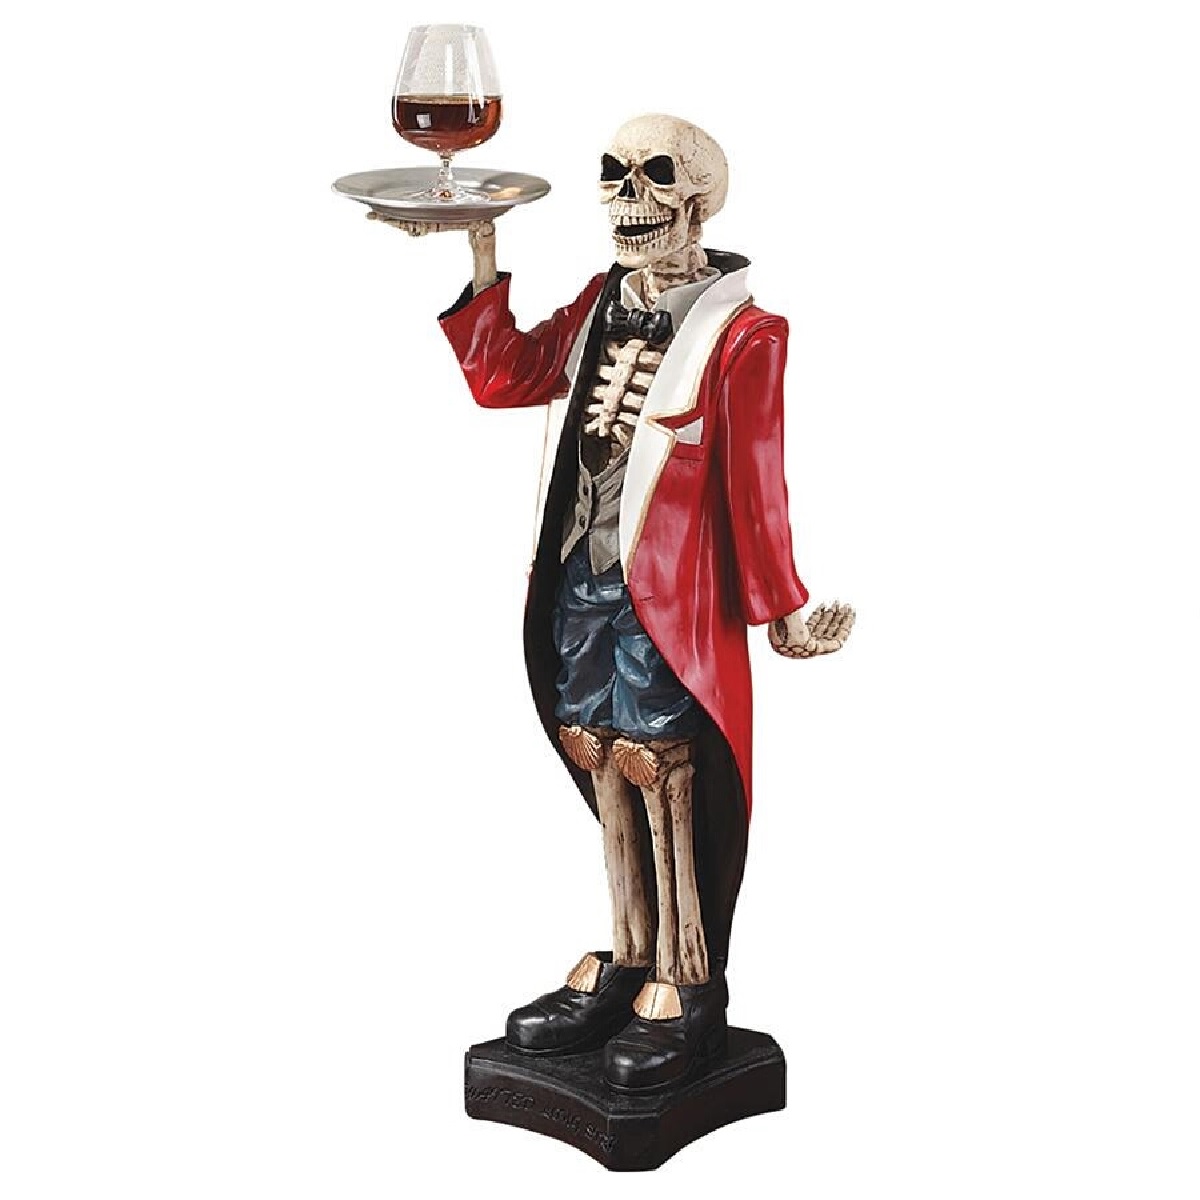 Outdoor Living and Style Bones the English Butler Halloween Sculptural Pedestal Table - 36"